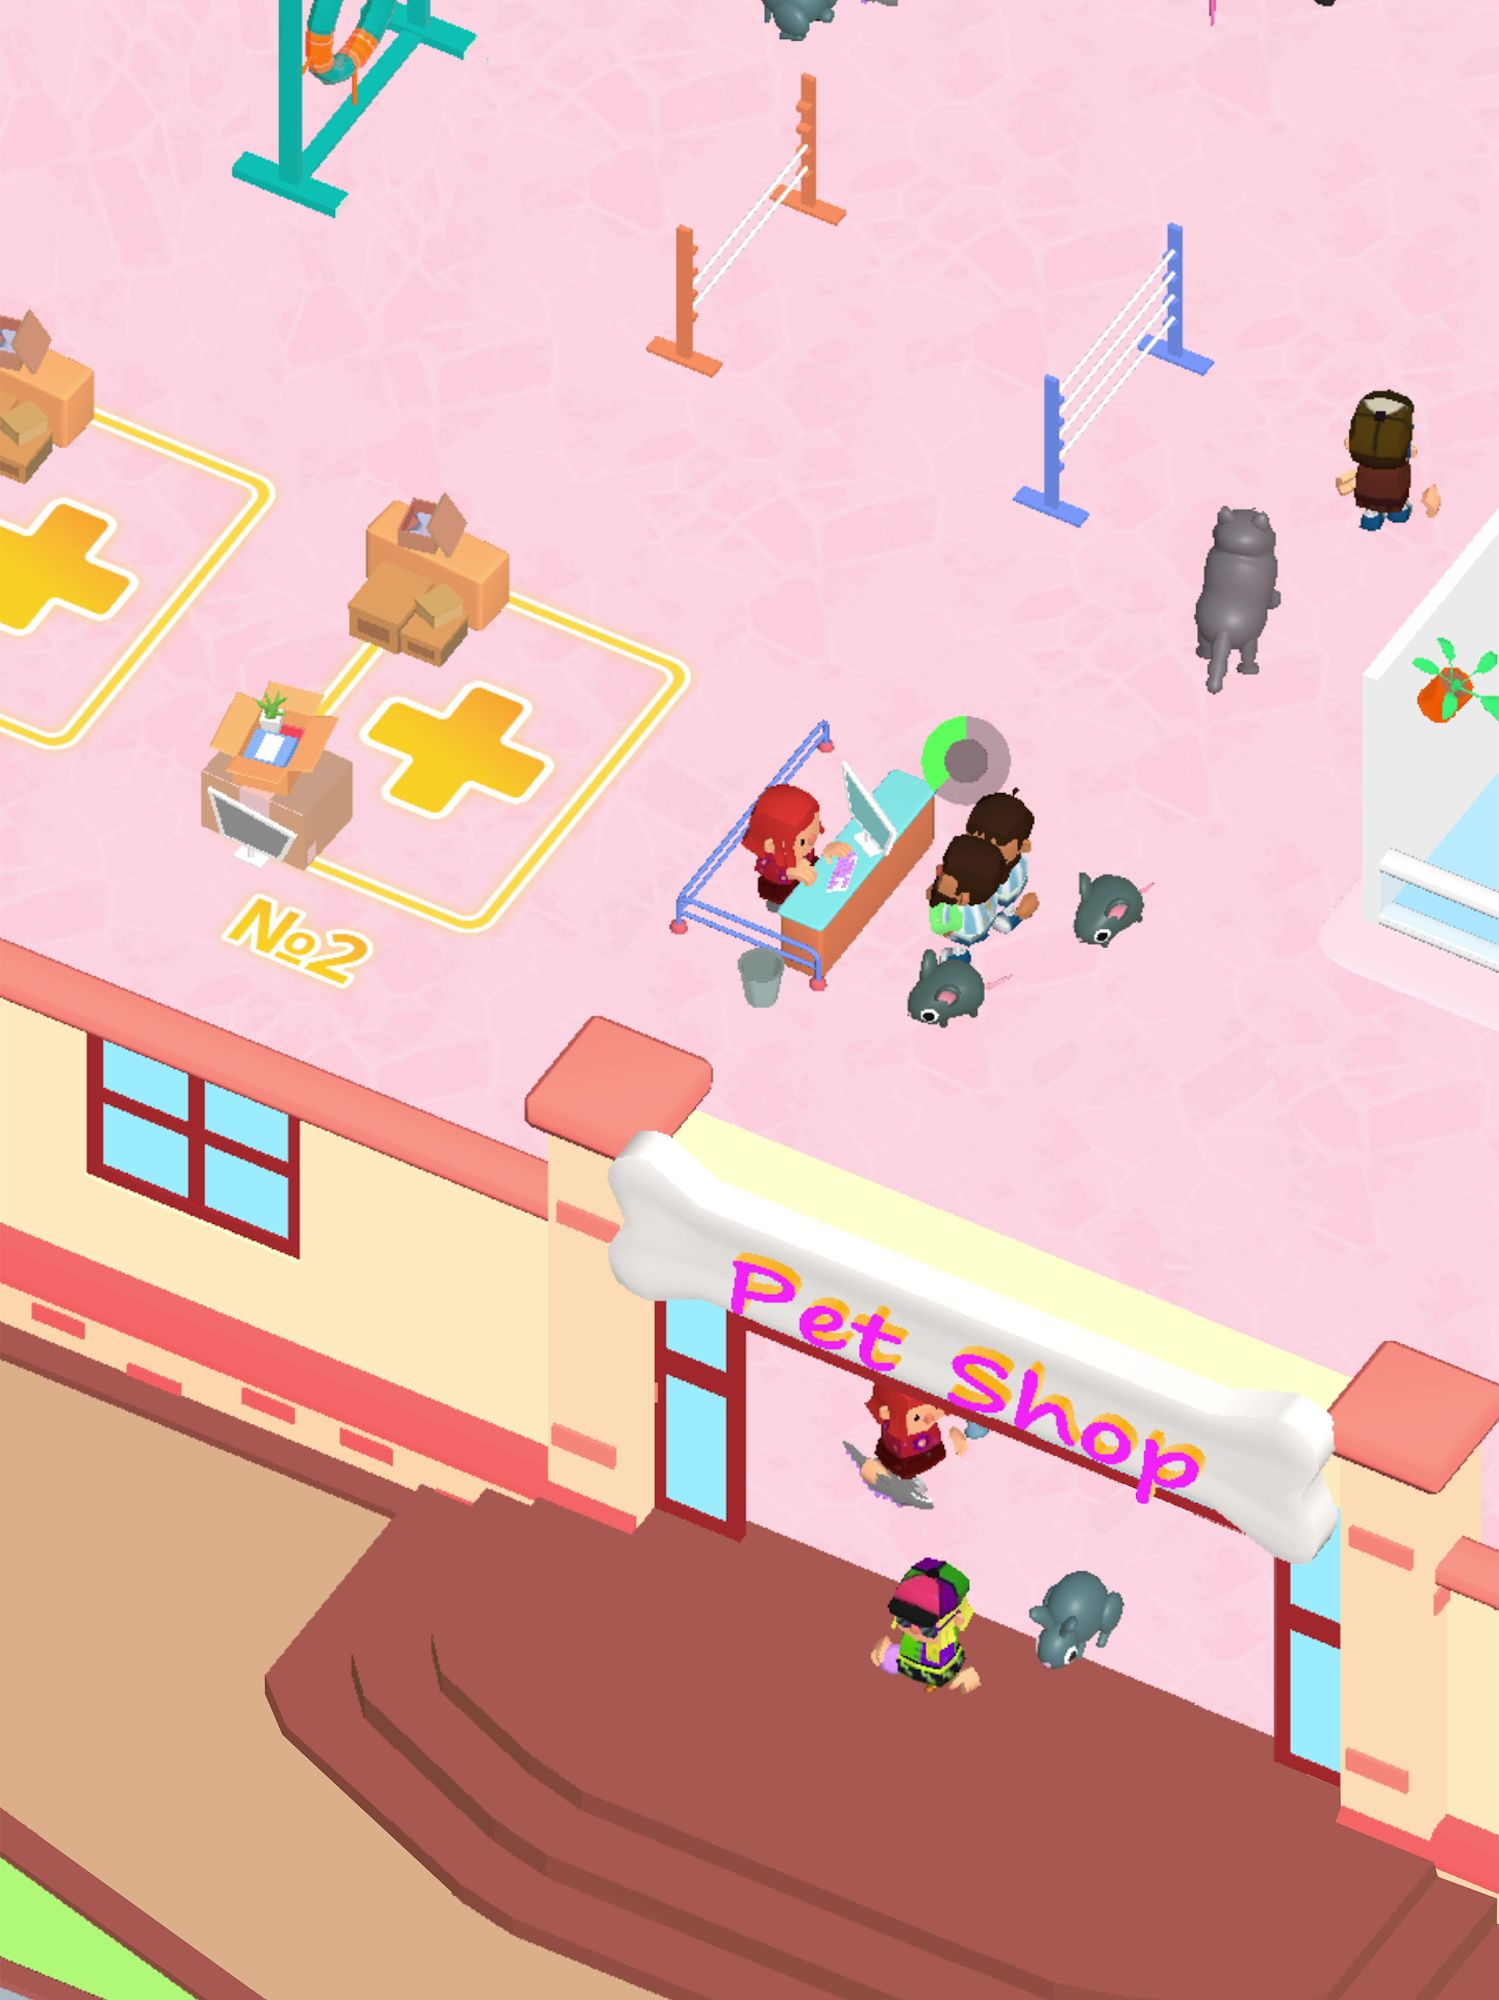 Download Idle Pet Shop -  Animal Game für Android kostenlos.